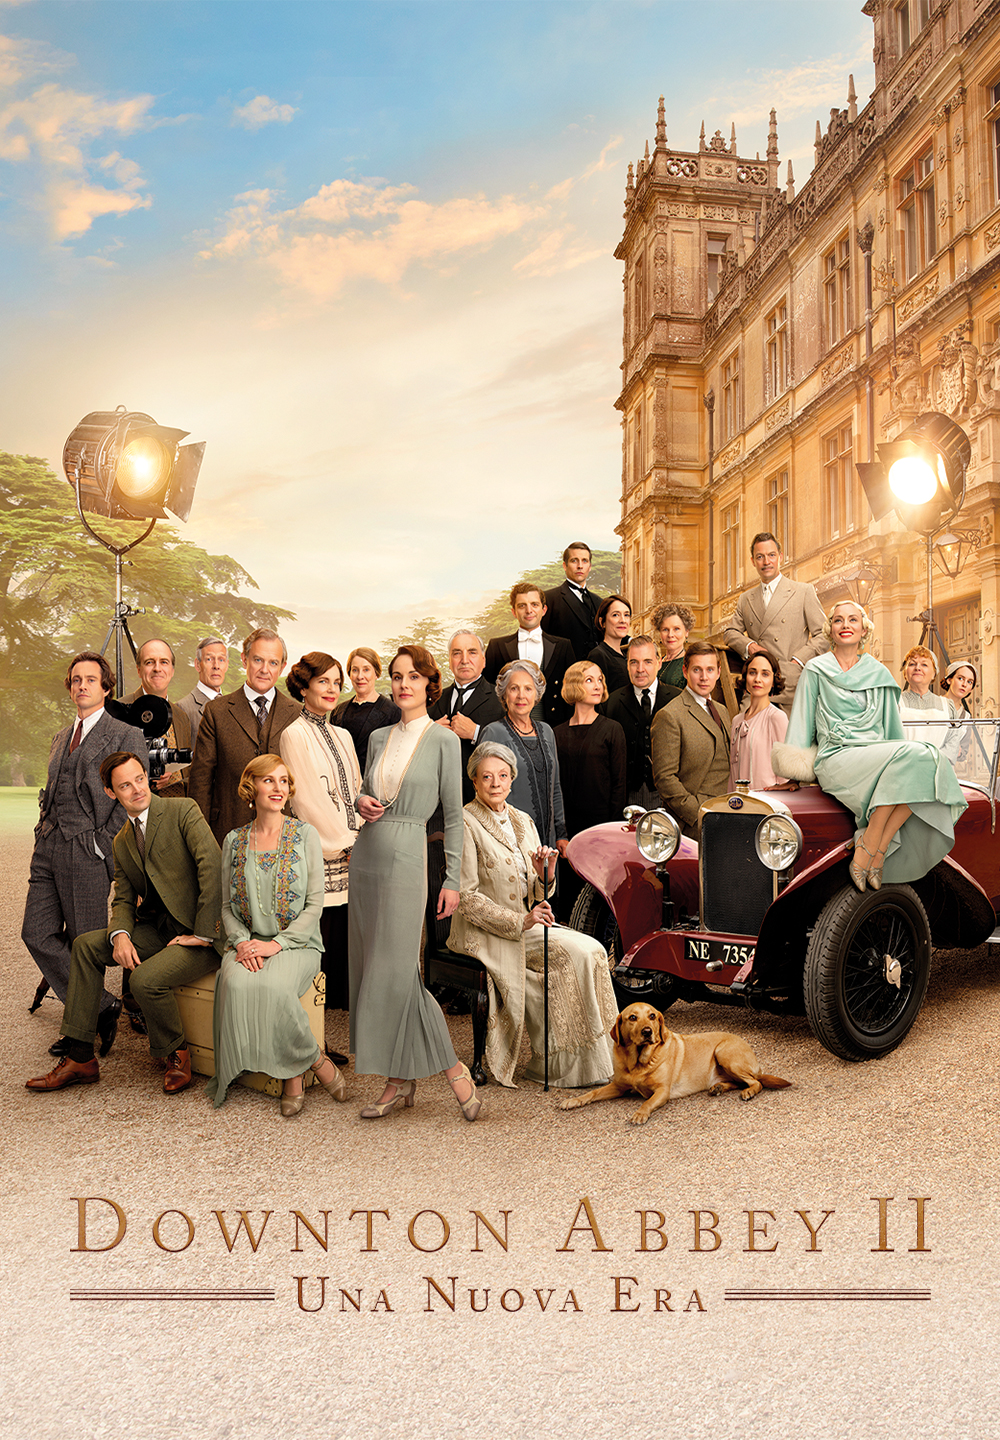 Downton Abbey II – Una nuova era [HD] (2022)